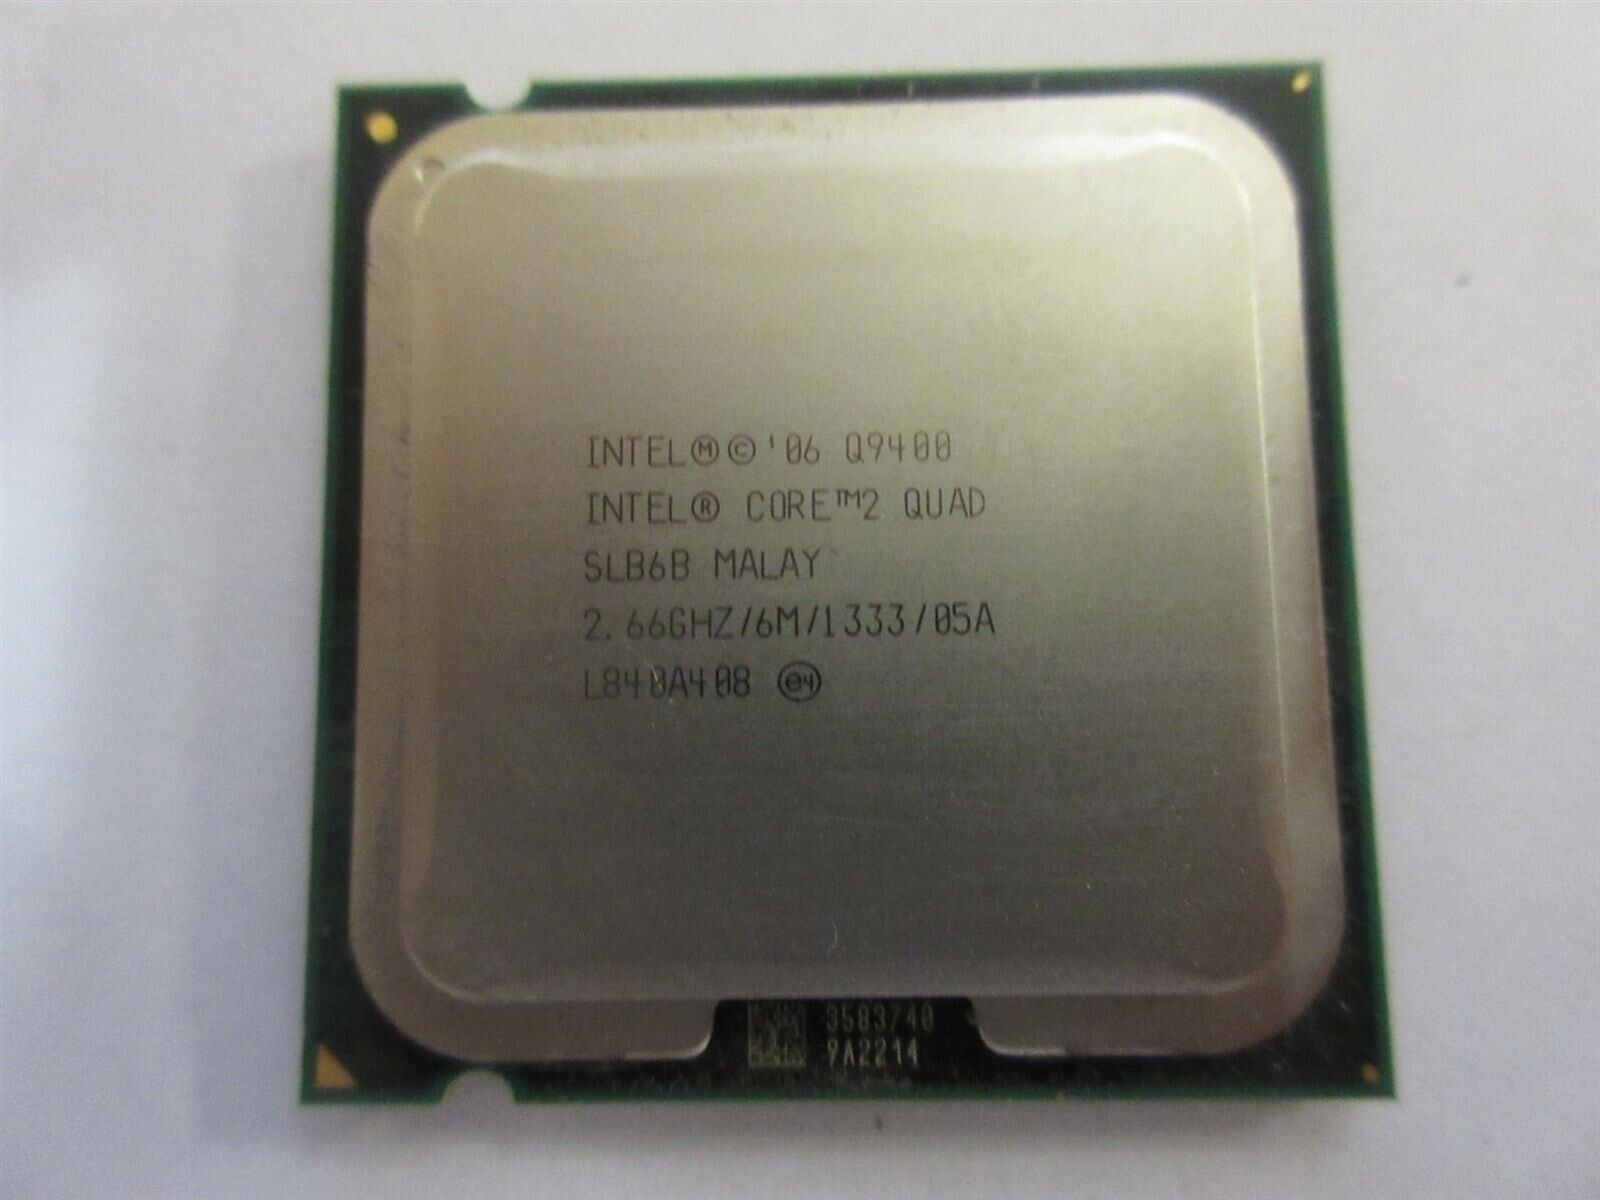 Intel SLB6B Core 2 Quad Q9400 2.66GHz/6M/1333/05A CPU Processor Socket 775